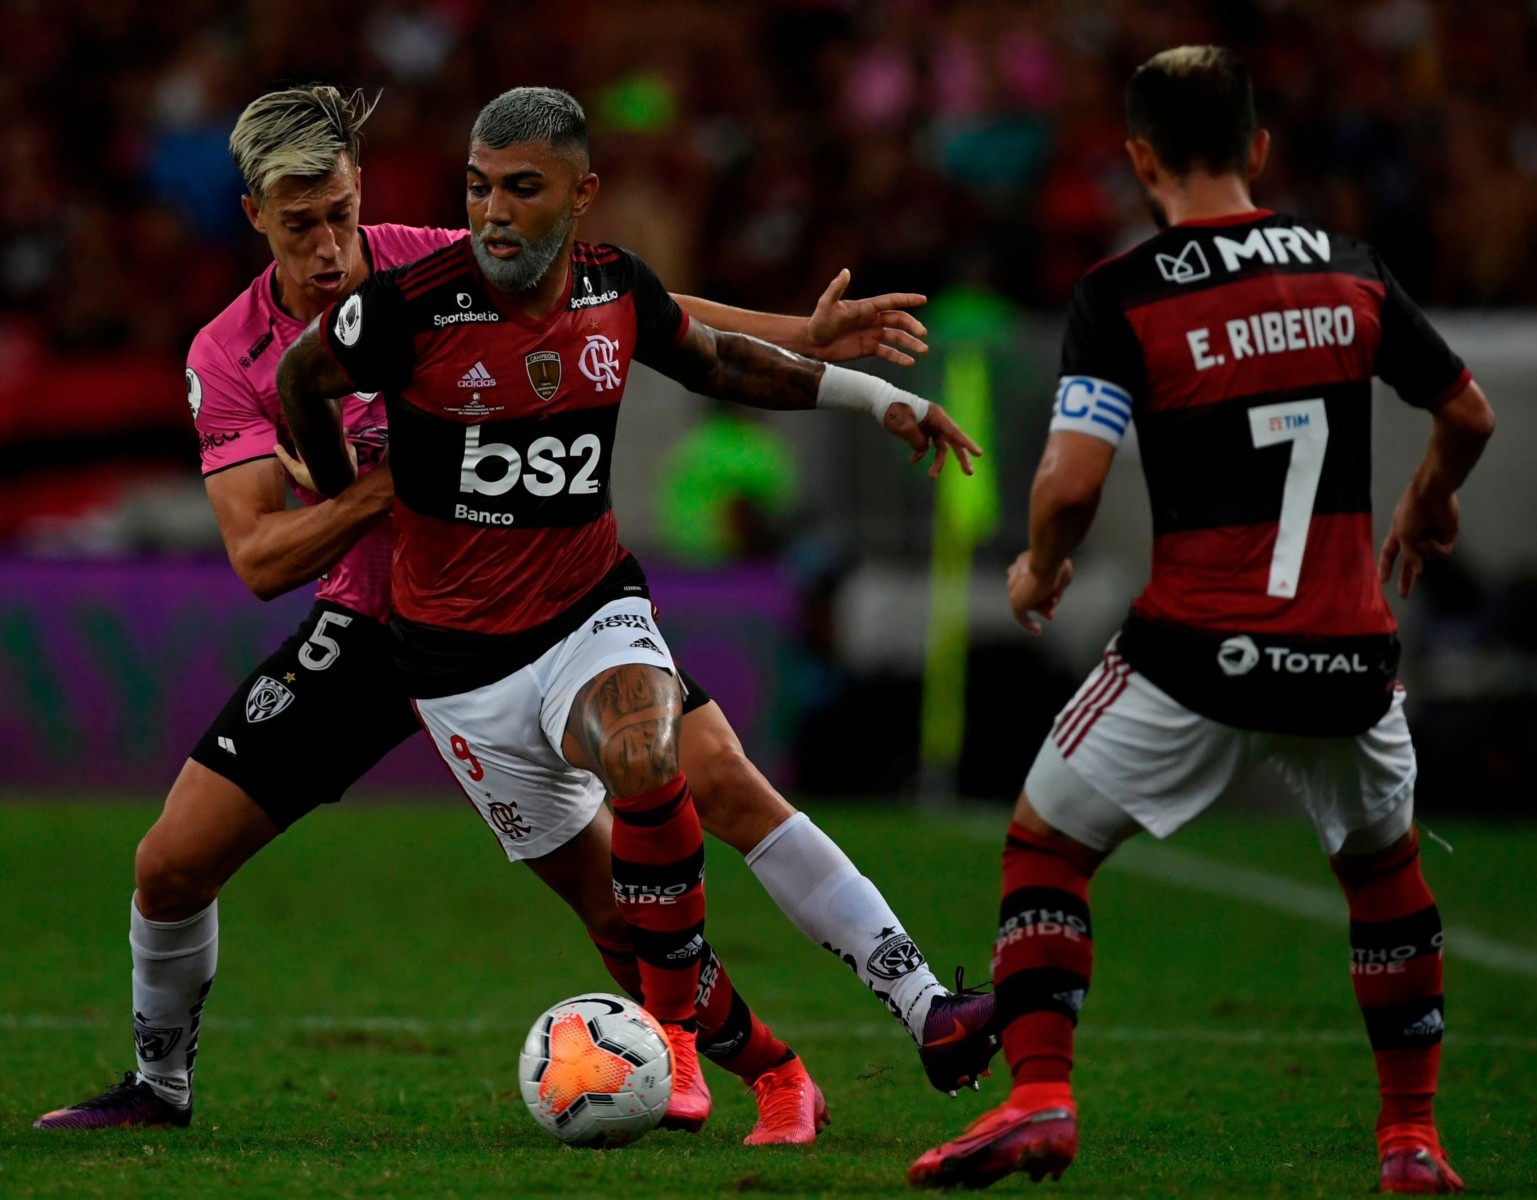 Despite his goalscoring record at Flamengo, Barbosa has struggled at a higher level